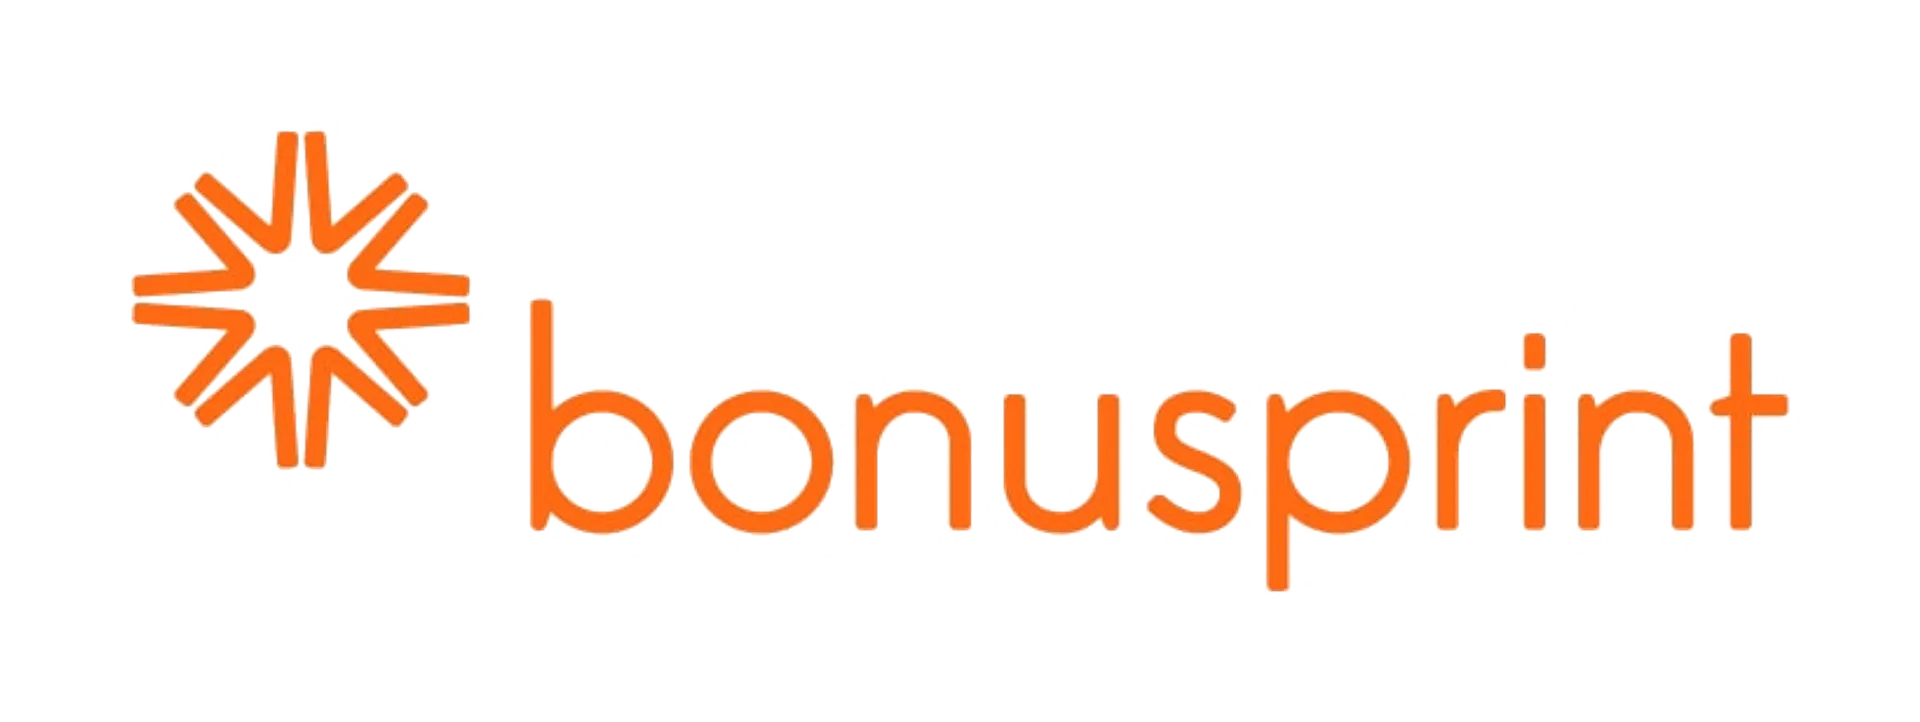 BONUSPRINT logo. Current weekly ad